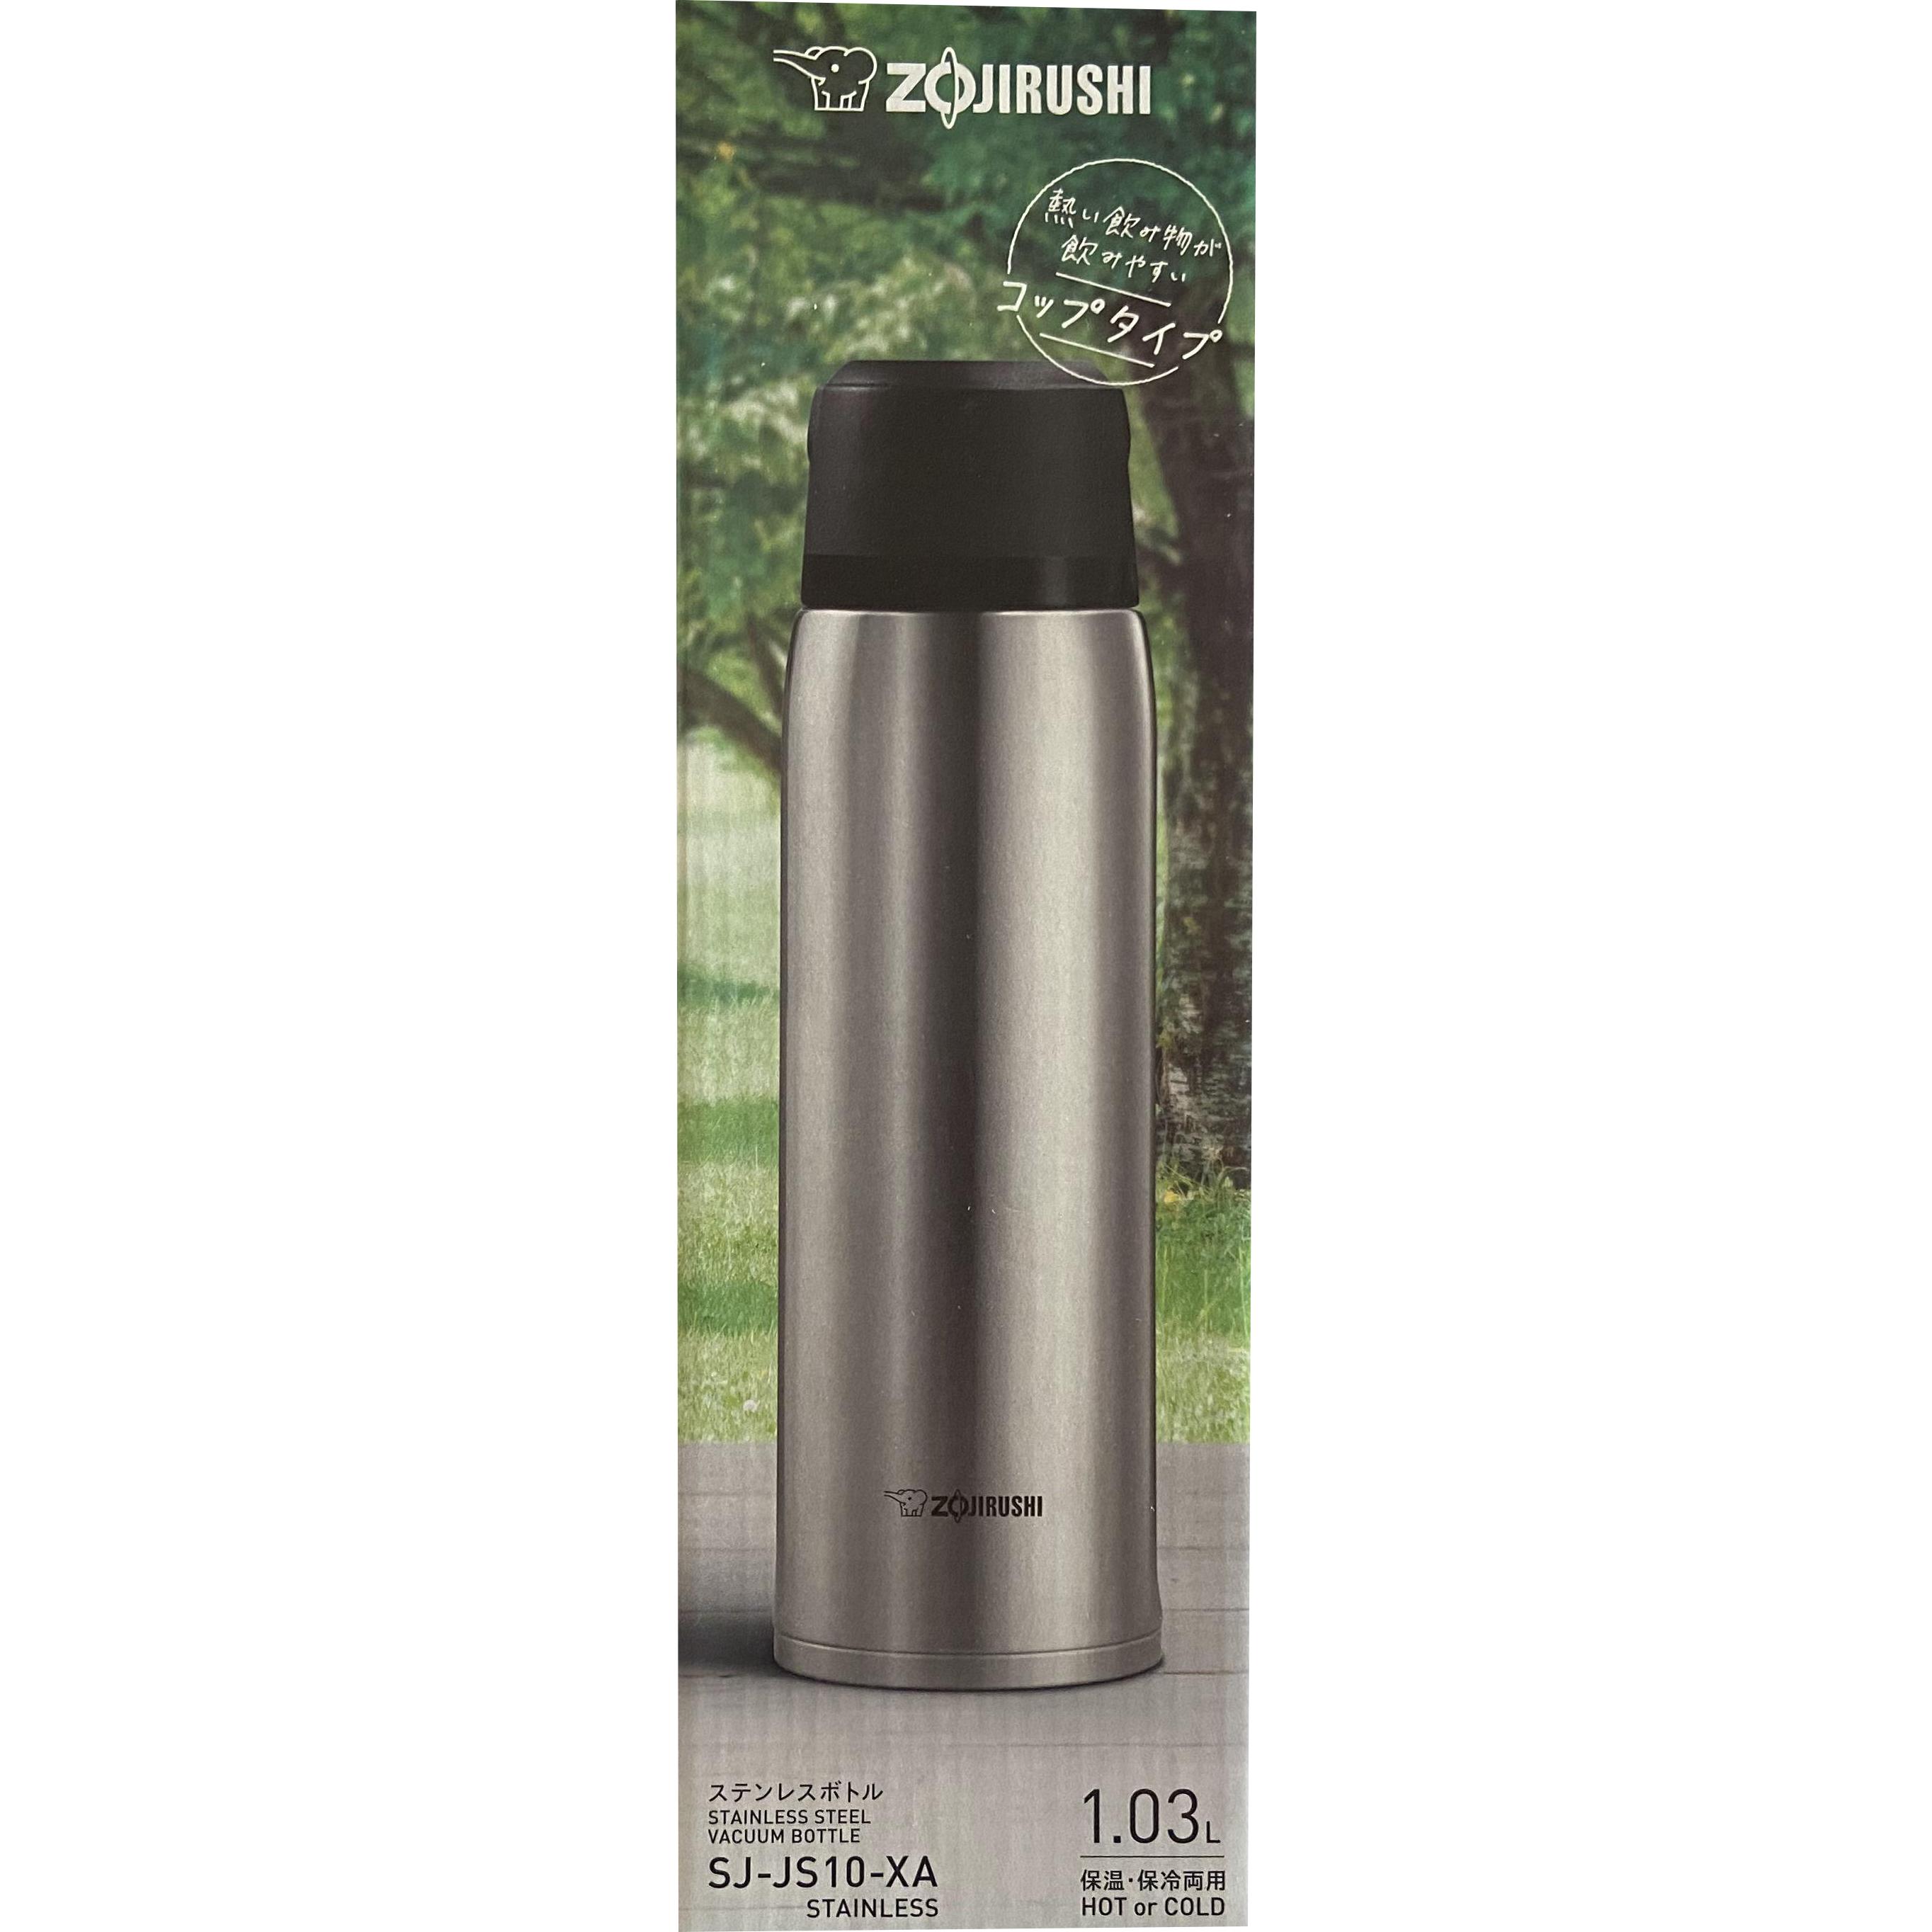 ZOJIRUSHI Water Bottle Stainless Mug 1030ml 1.03L Black SJ-JS10-BA SJ-JS10 